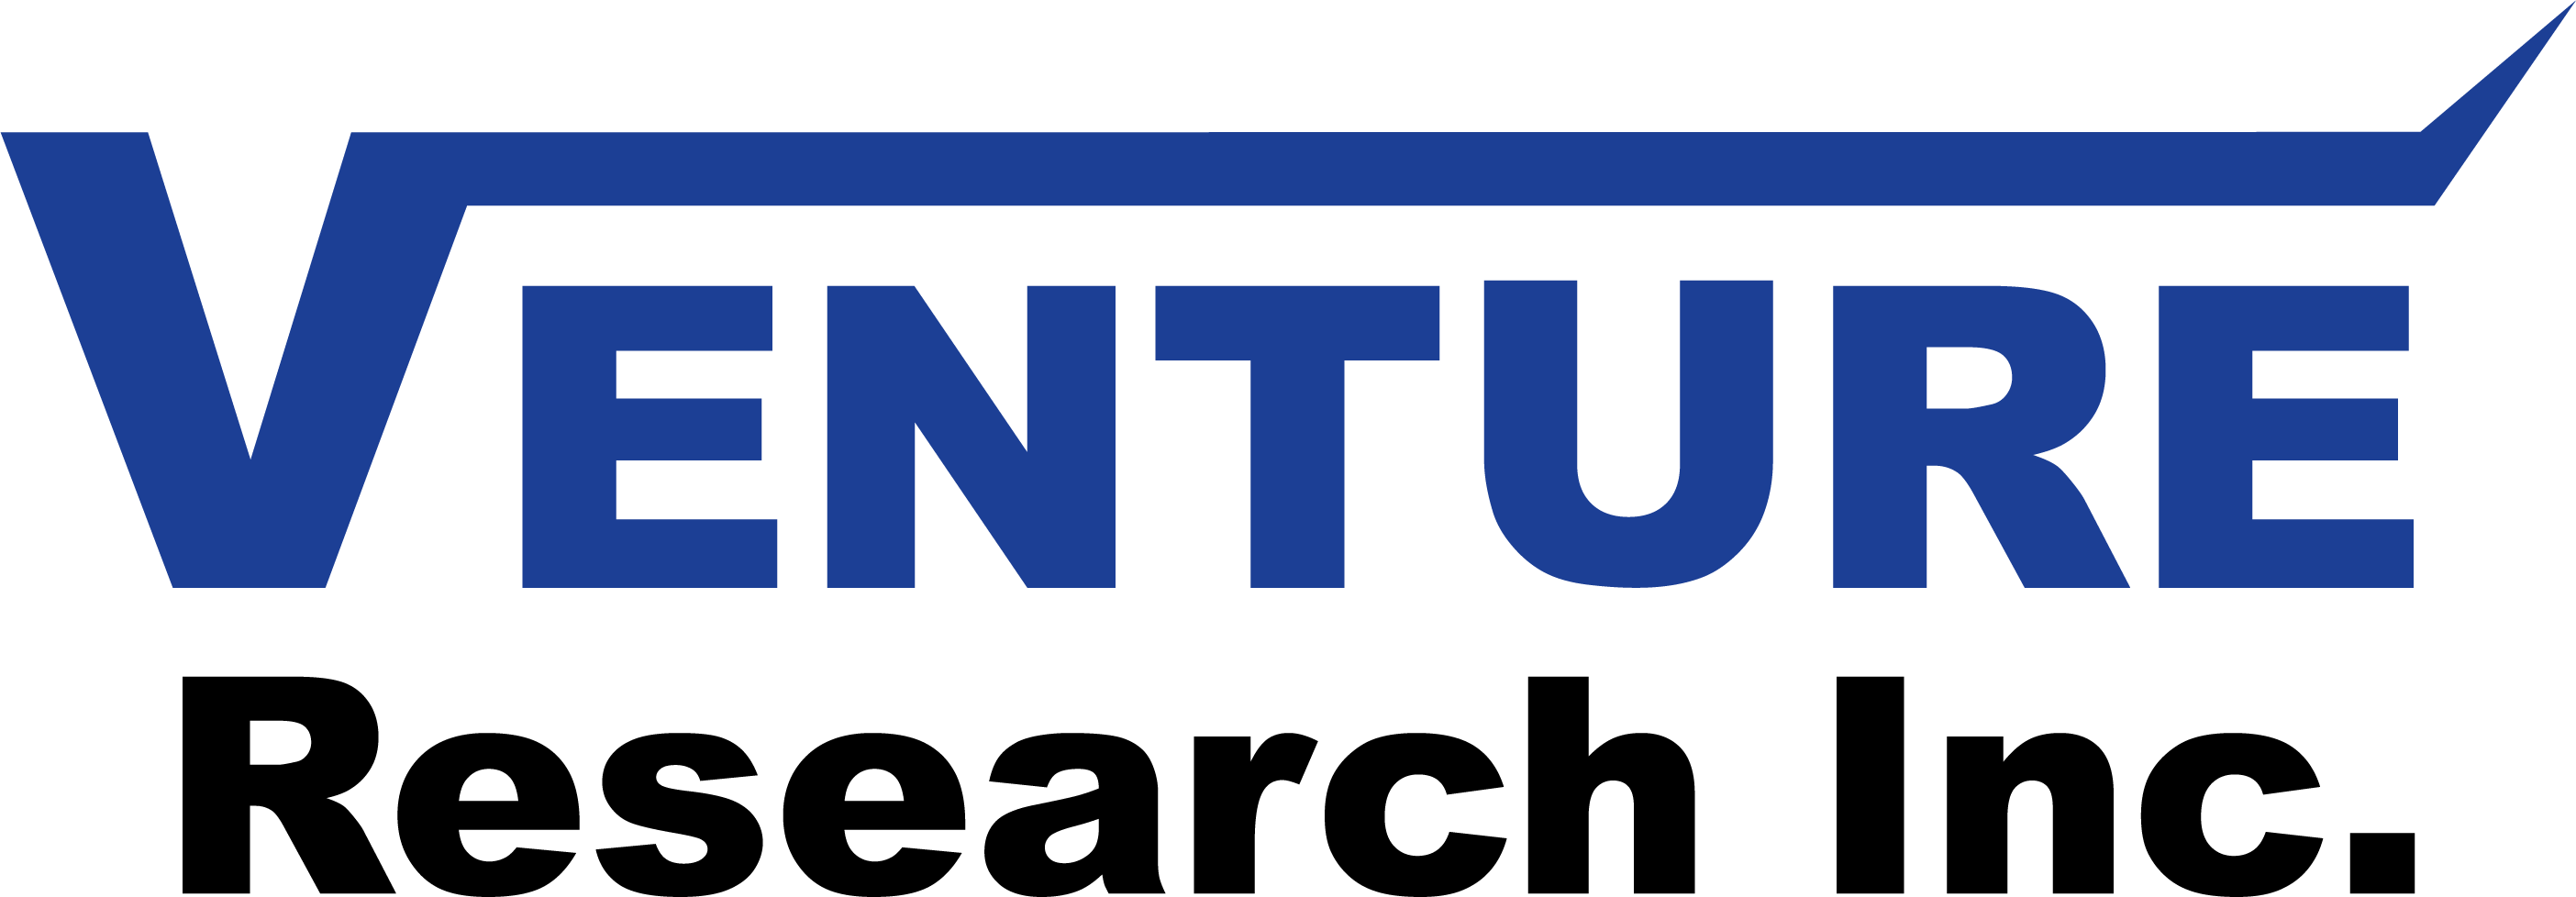 Venture Research